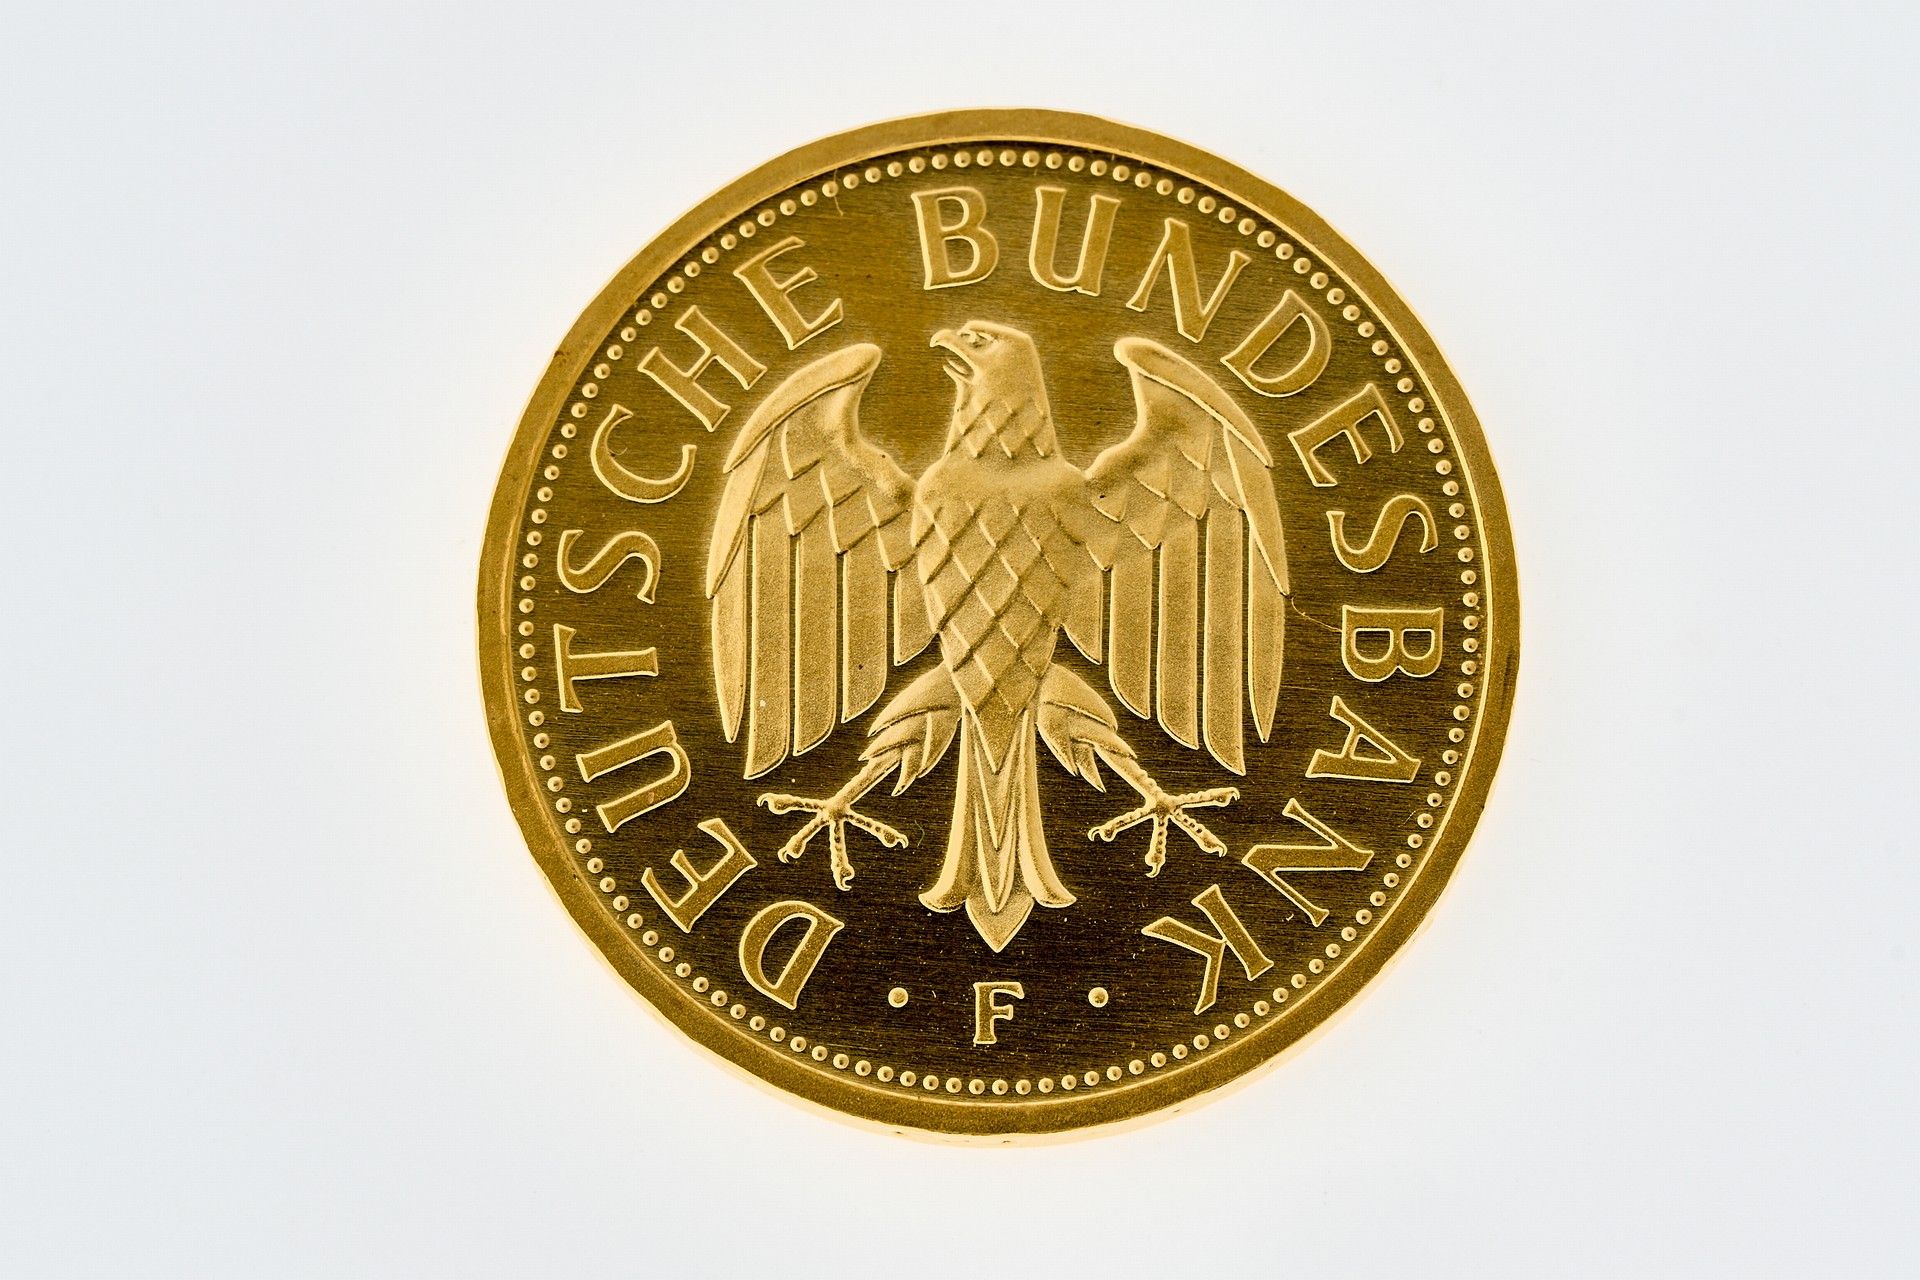 Bundesrepublik Deutschland - Image 2 of 2